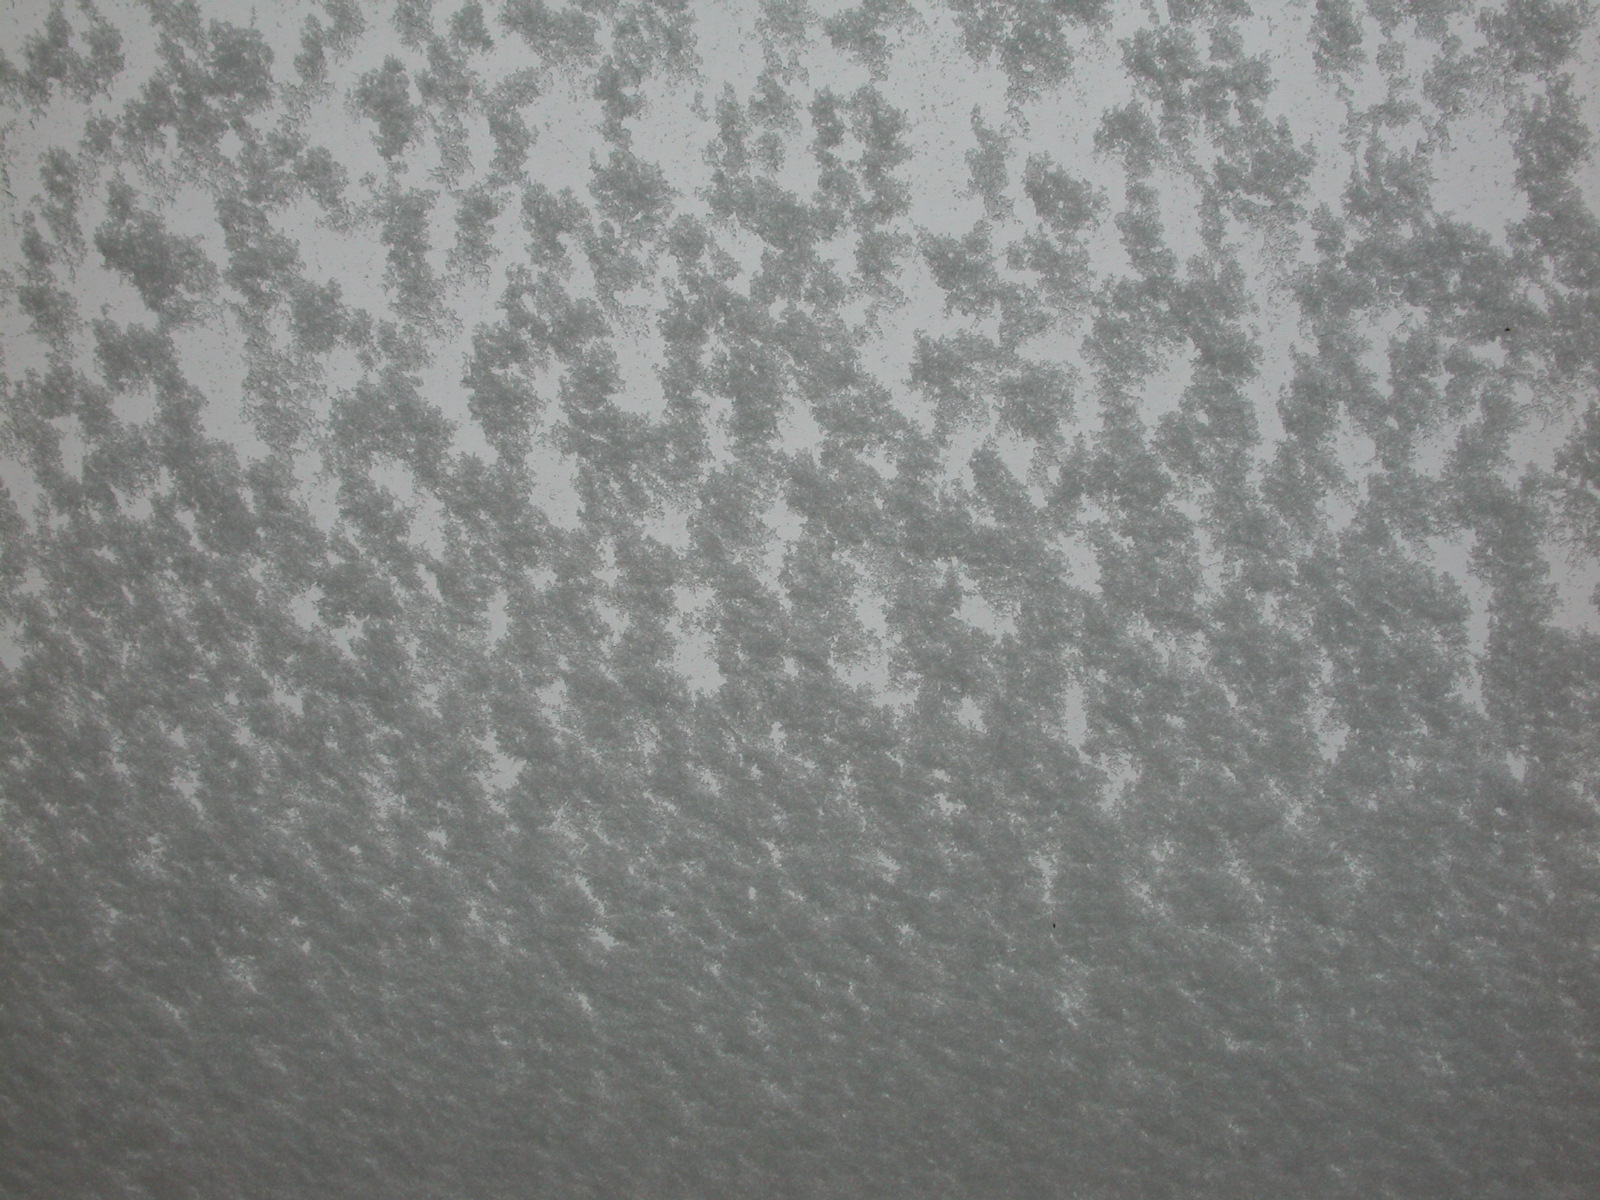 eva nature elements texture snow on glass winter frozen water